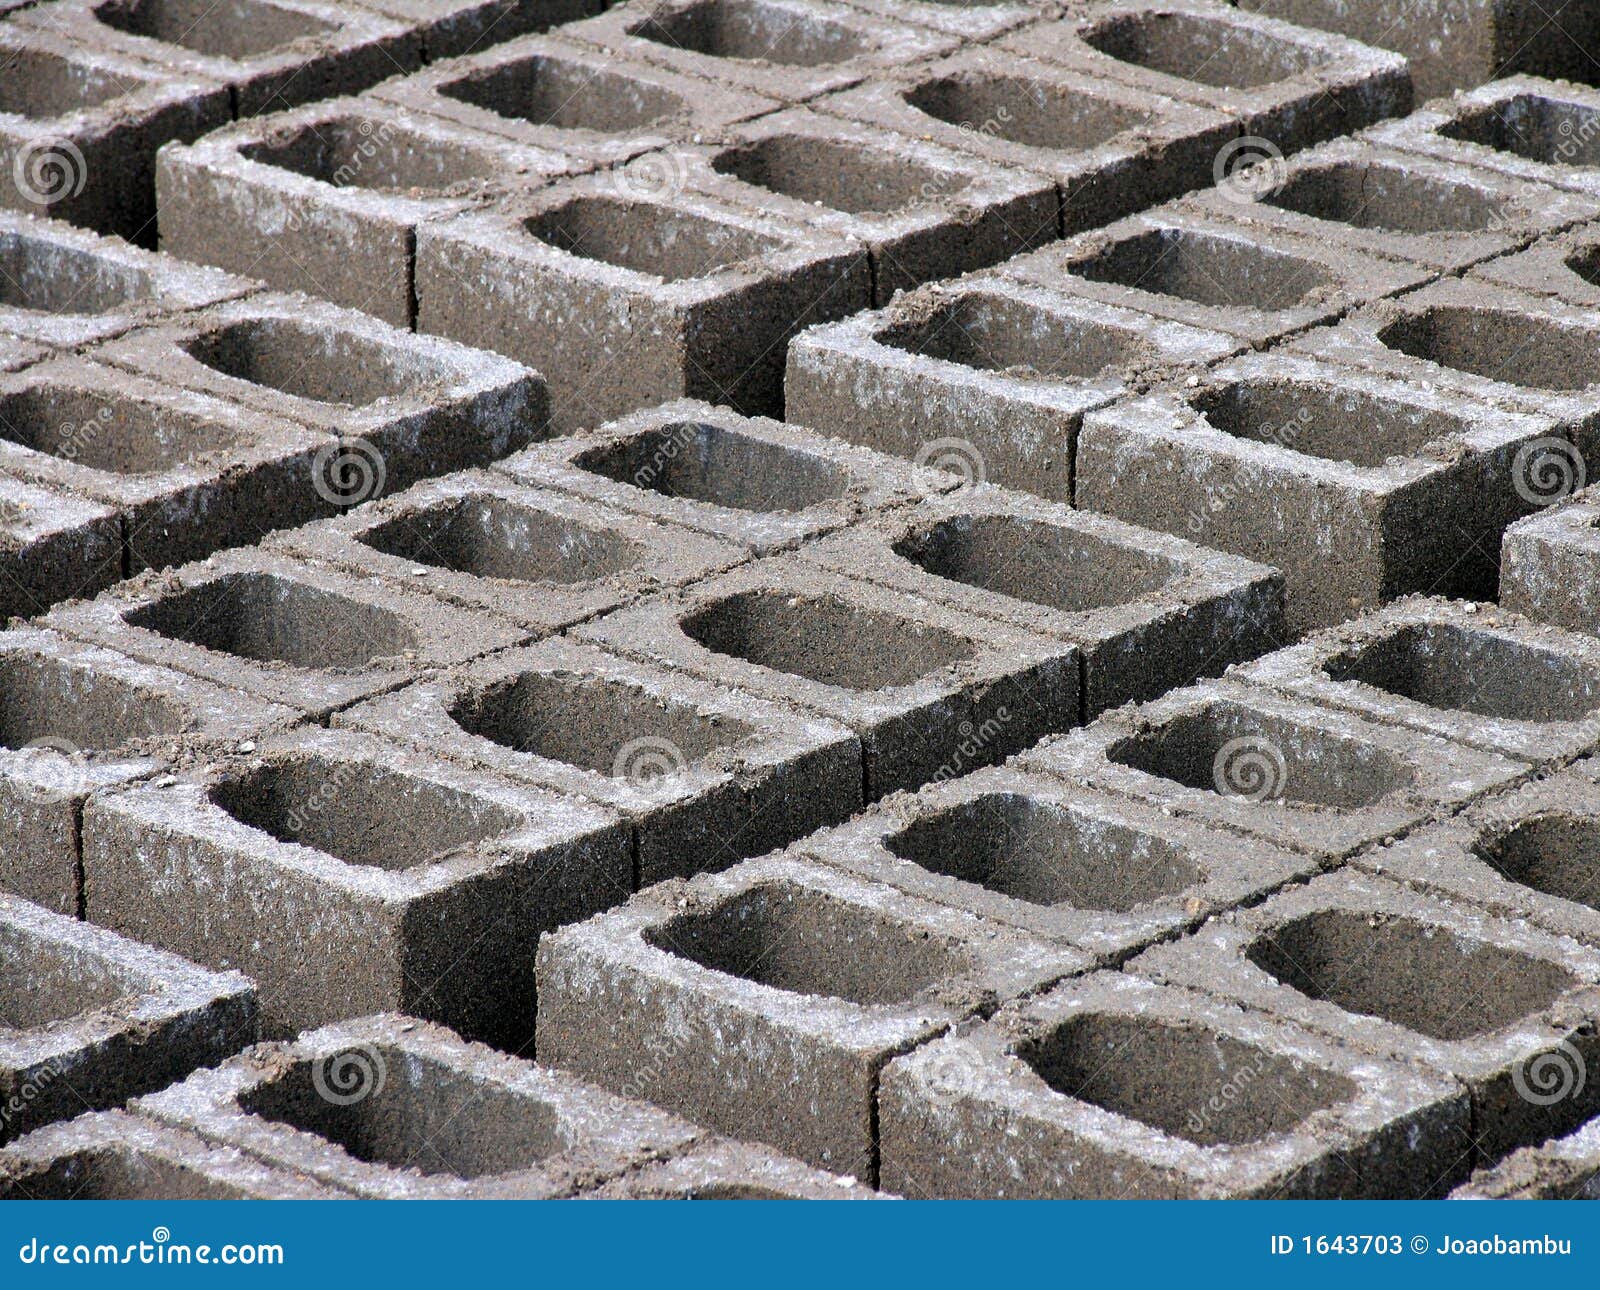 Concrete Bricks Stock Photos - Image: 1643703